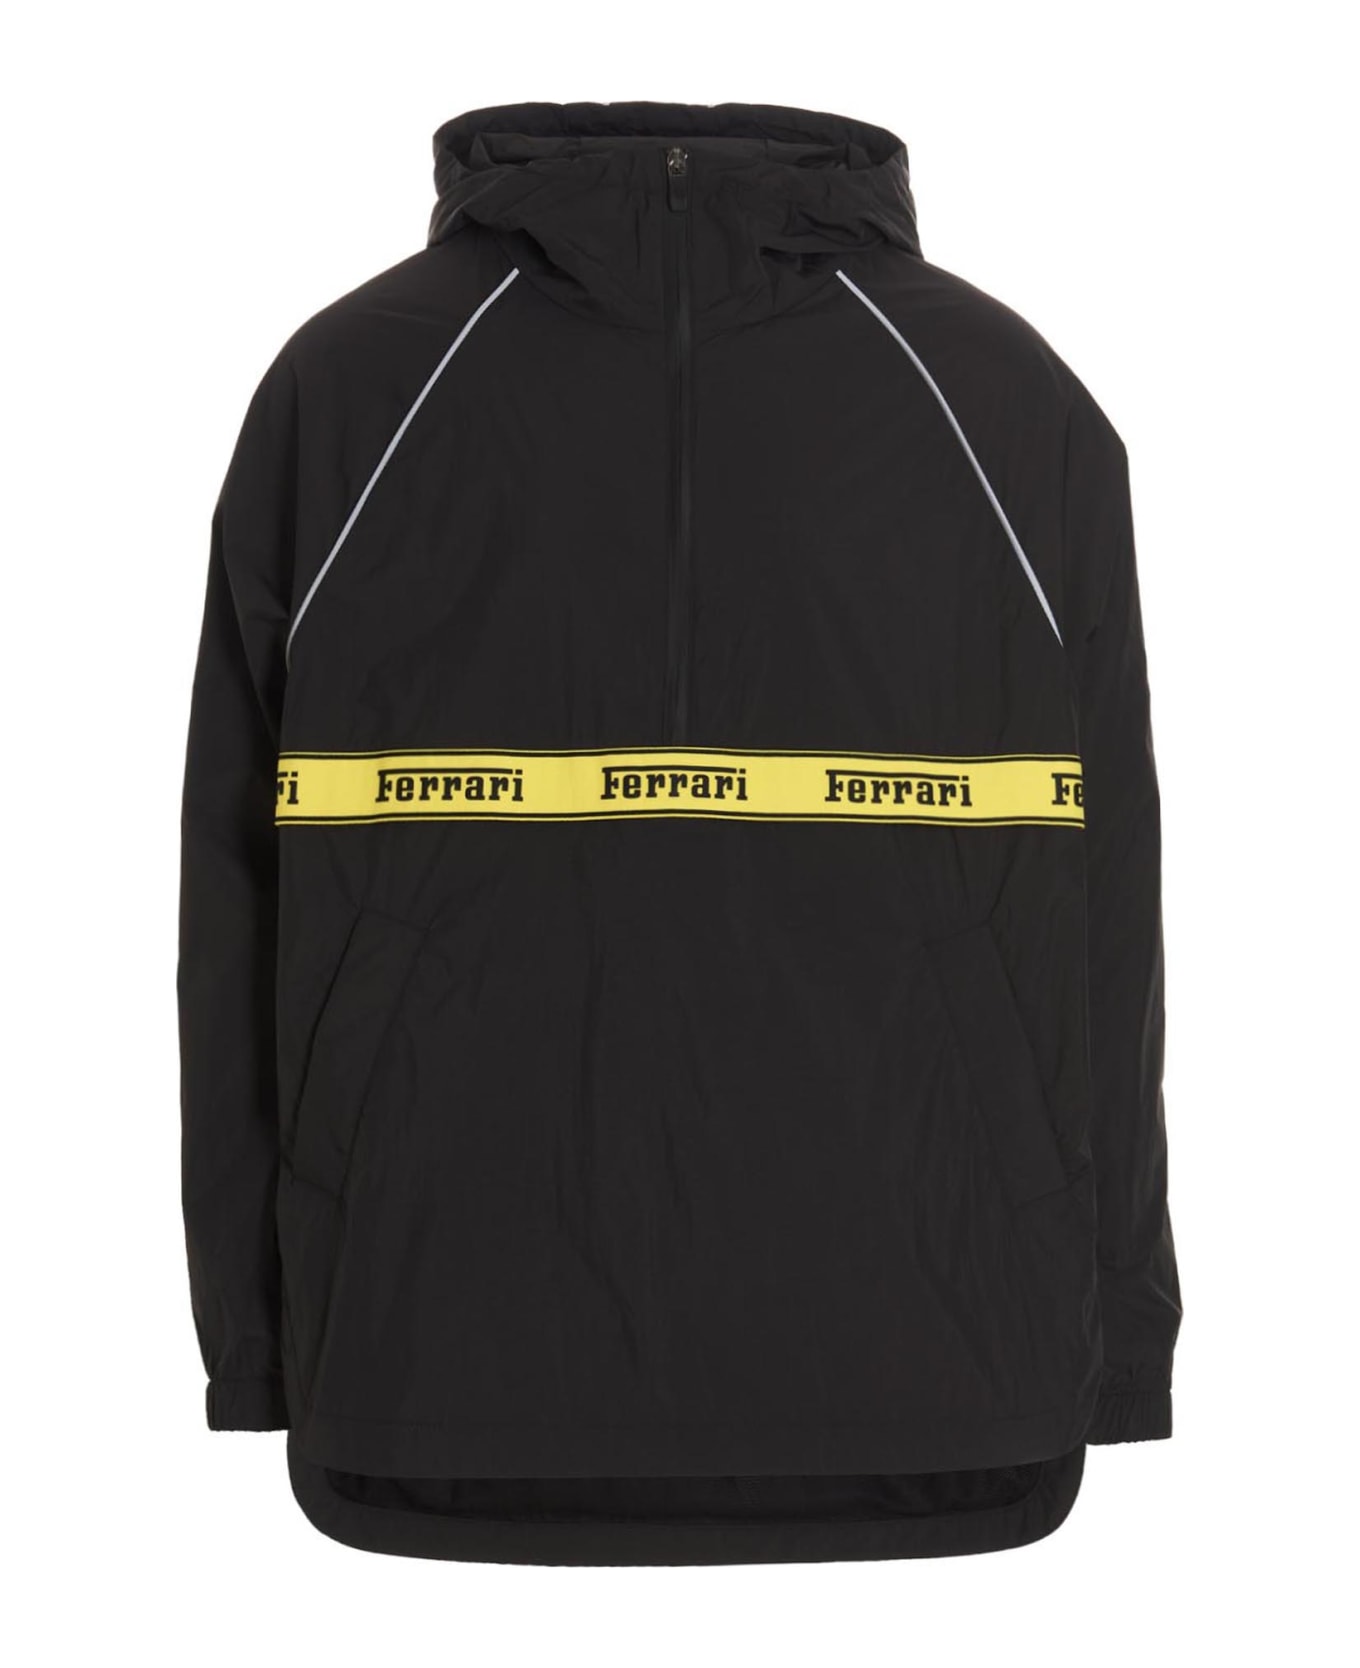 Ferrari Logo Band Jacket - Black  